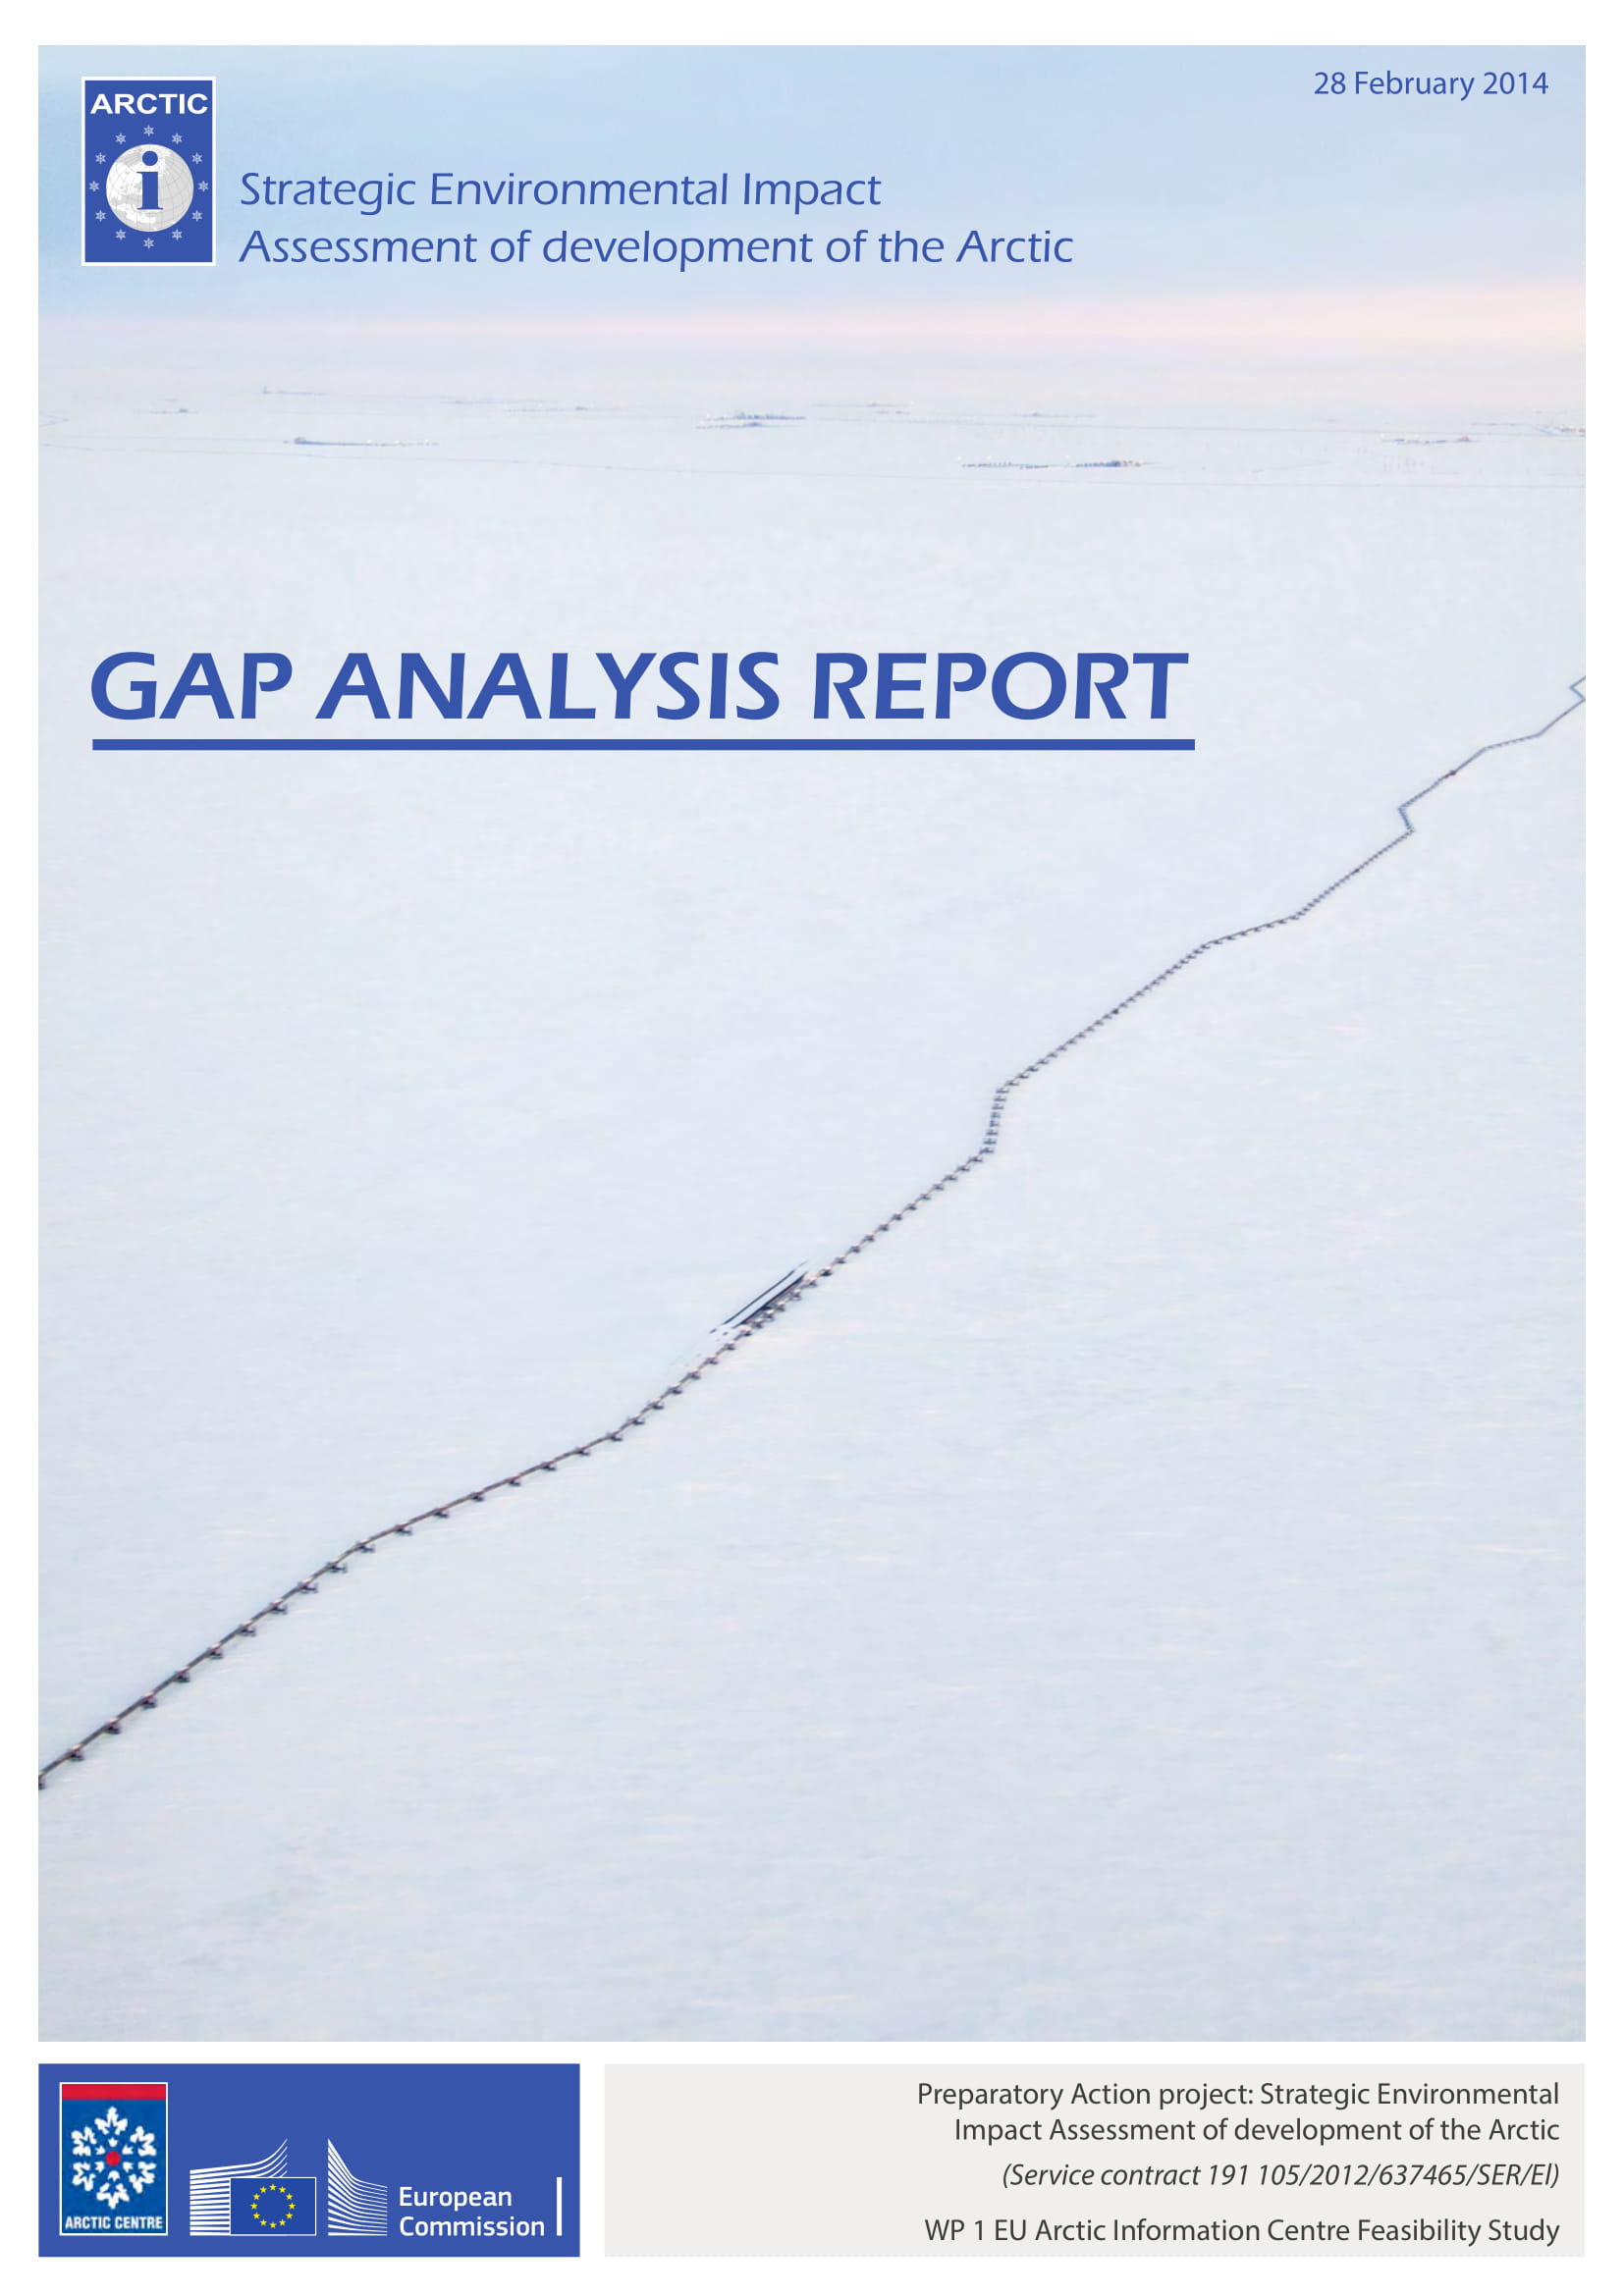 detailed gap analysis report example 001